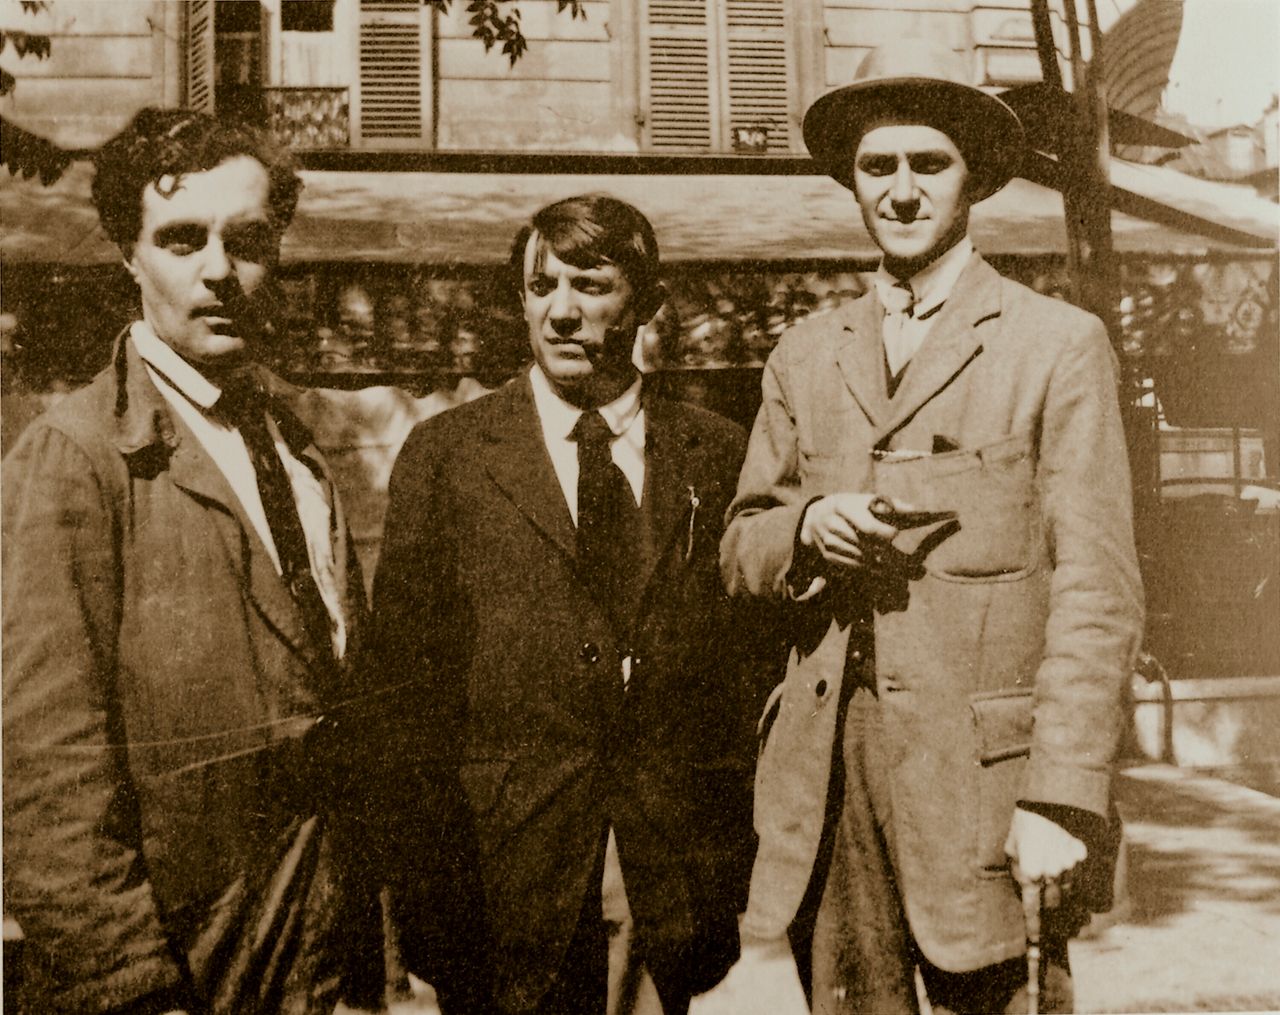 Aπό τα αριστερά Amedeo Modigliani, Picasso, και ο γάλλος ποιητής Andre Salmon. 